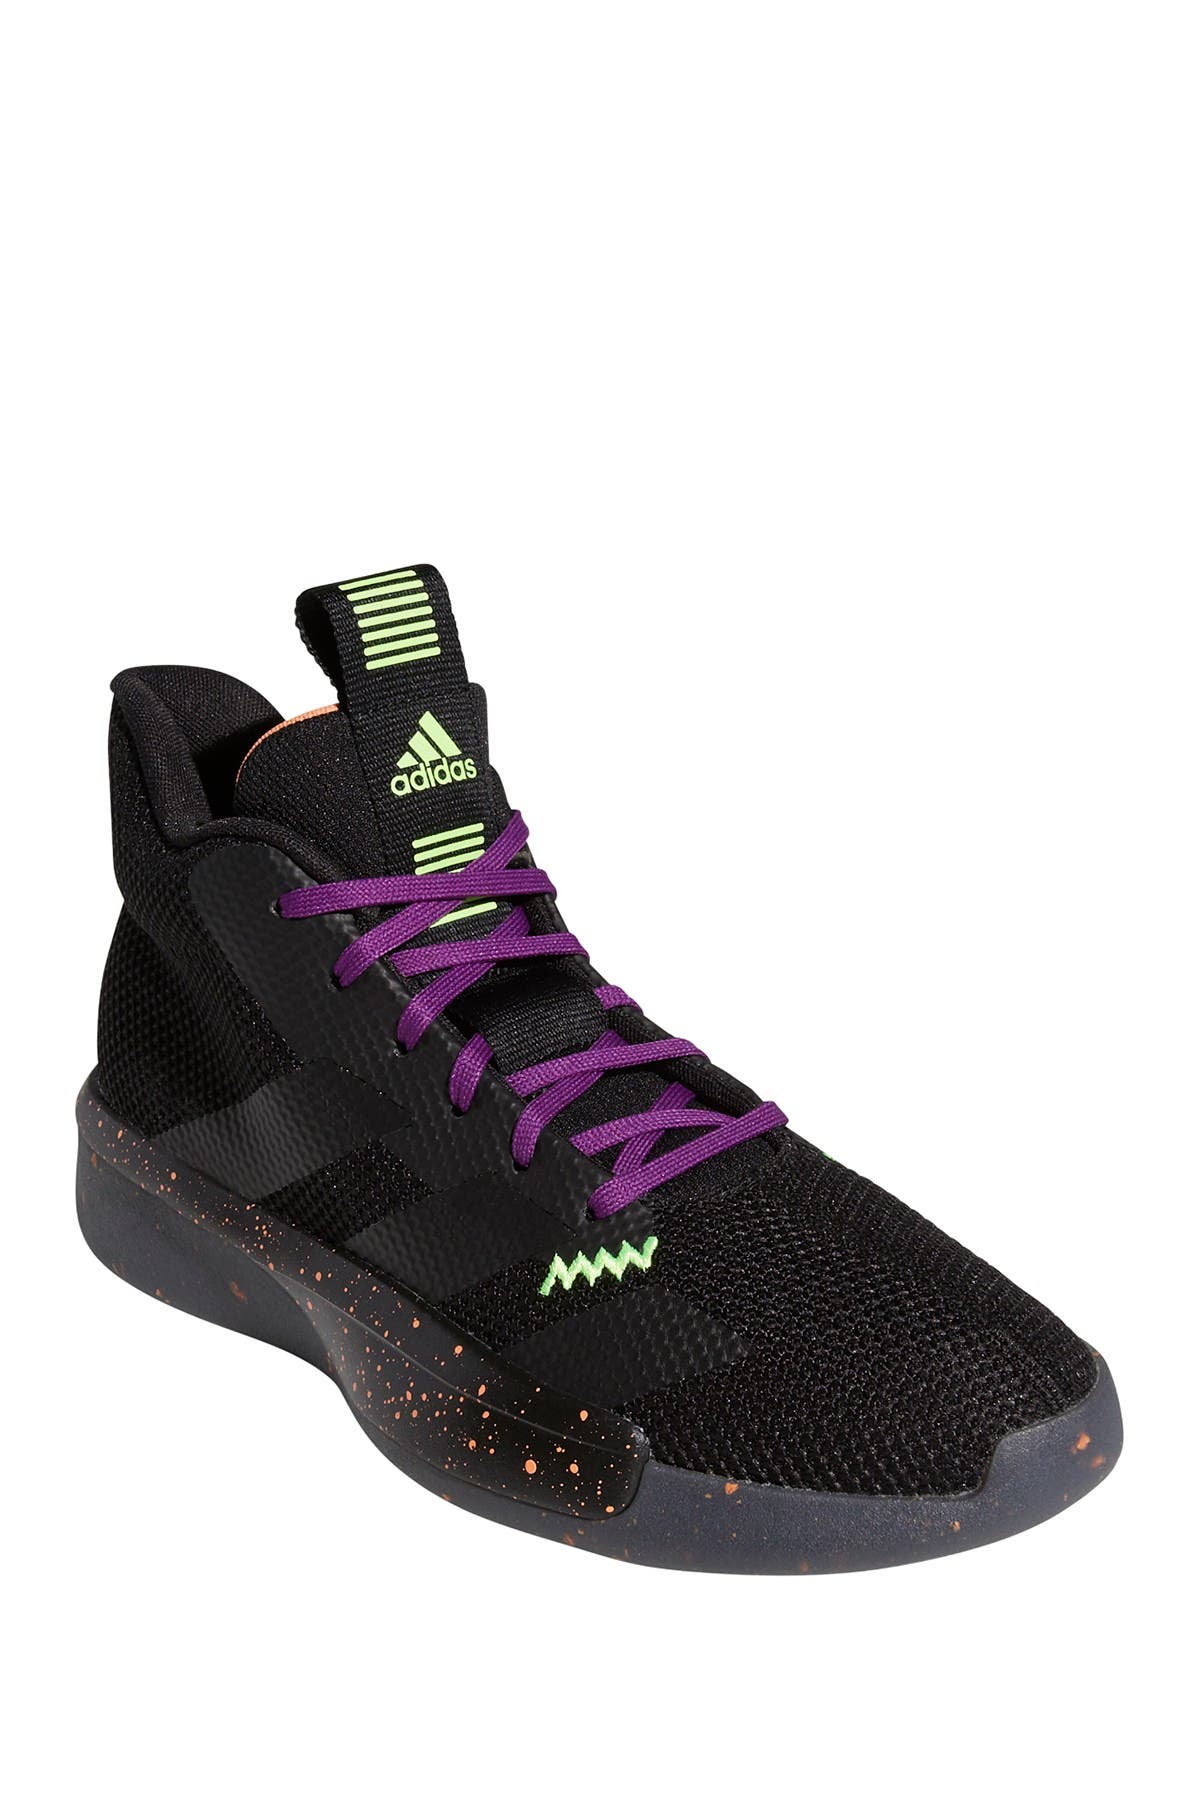 adidas 2019 basketball shoes